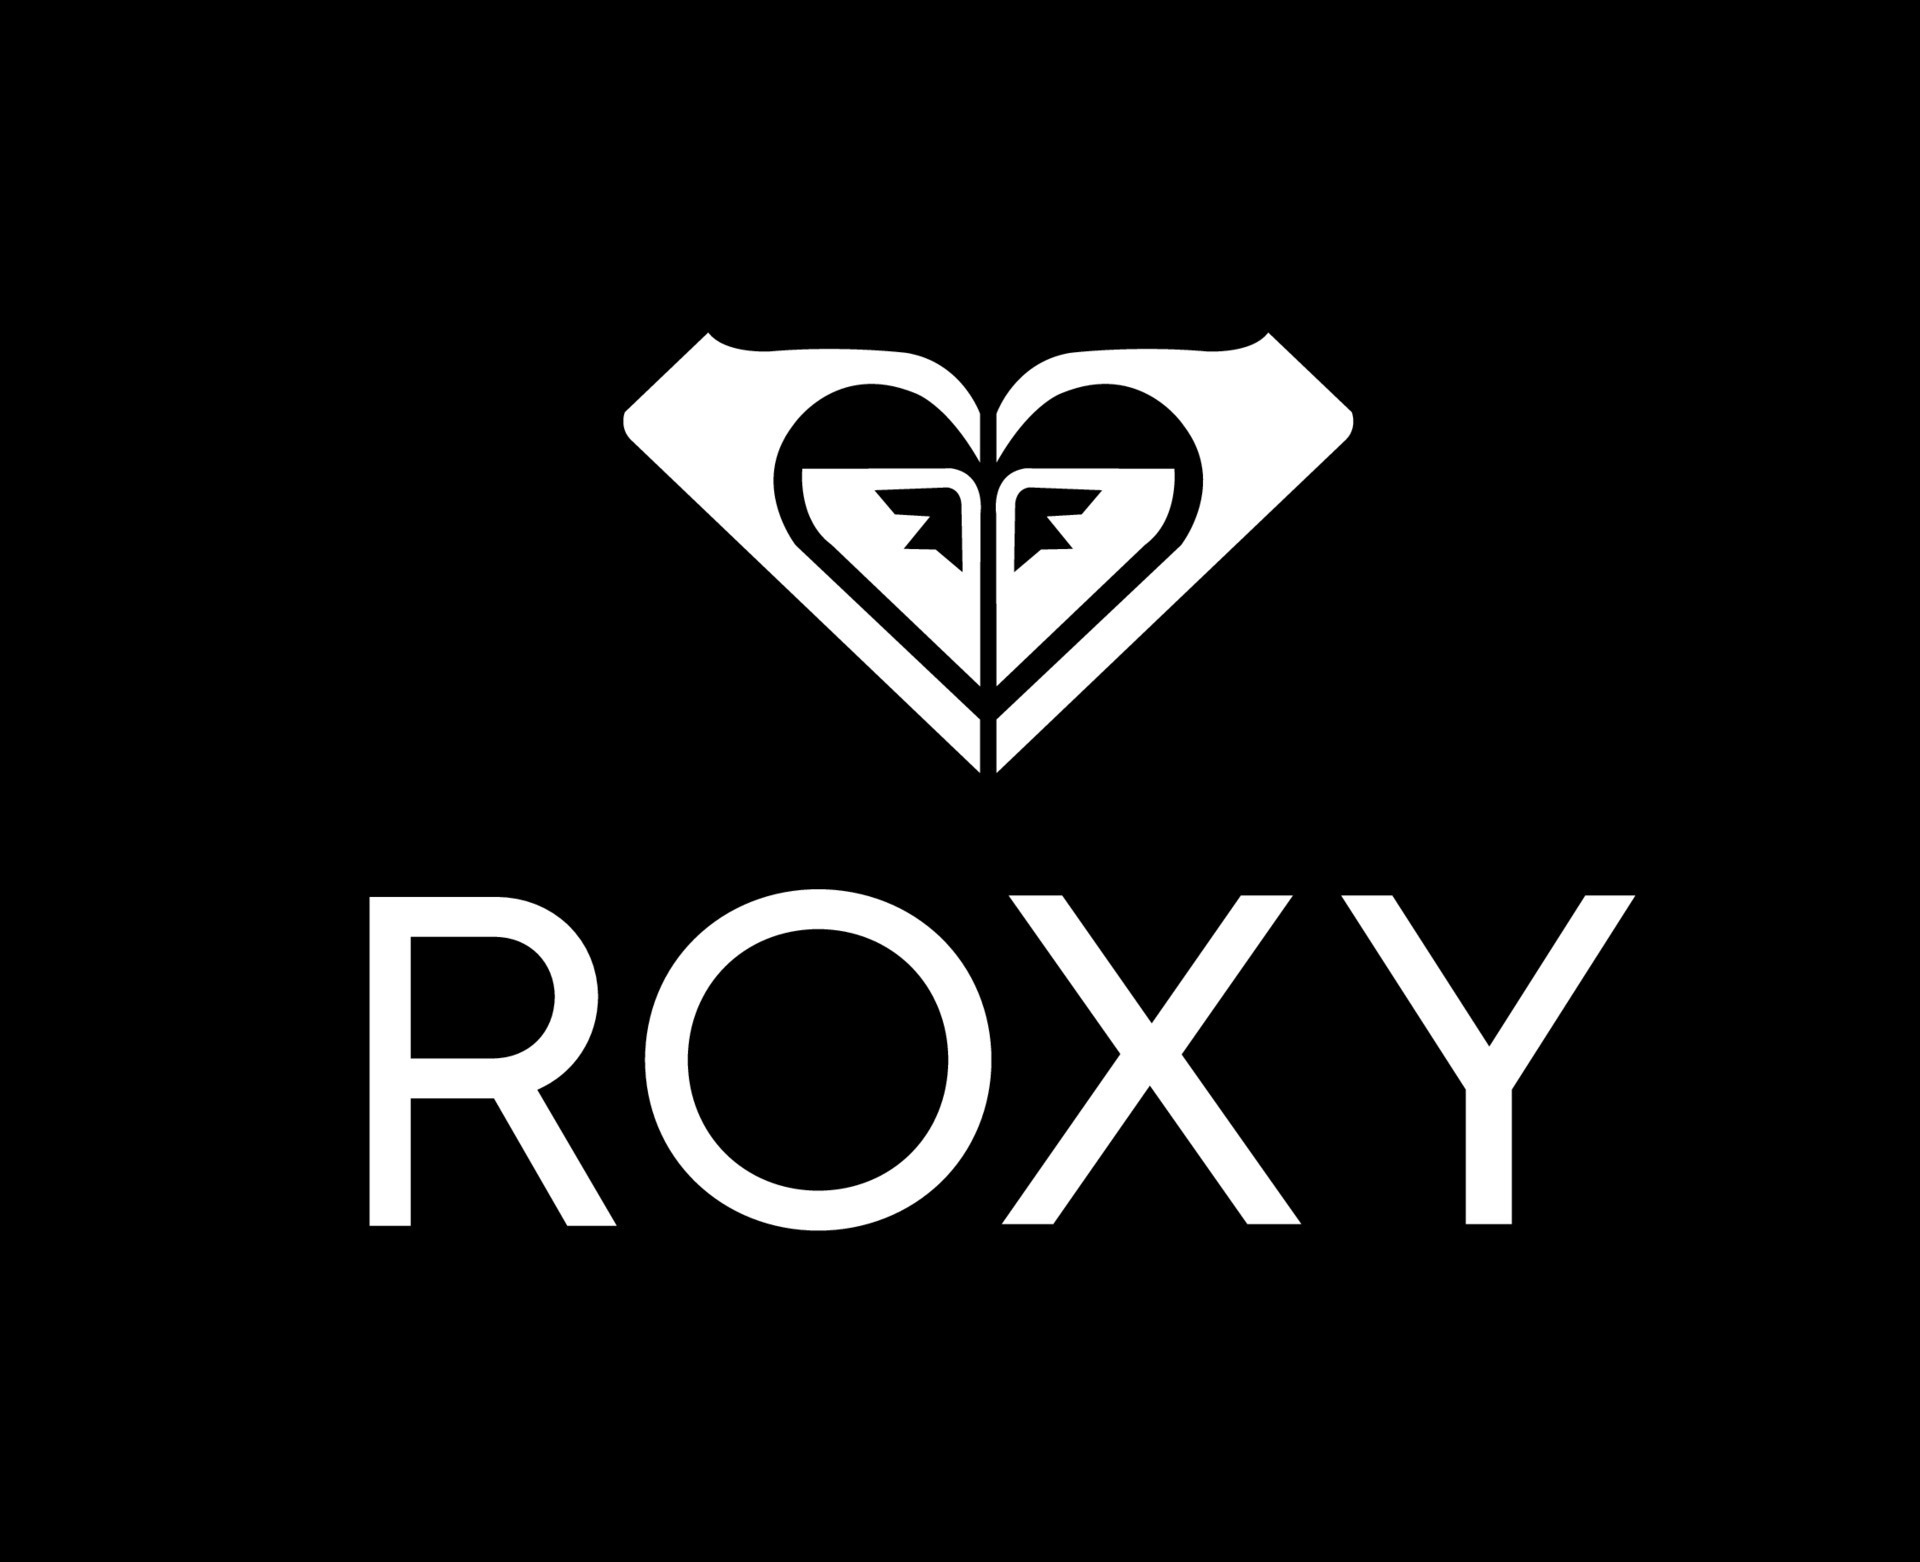 Roxy | Logo by Marcus F. Keegan on Dribbble